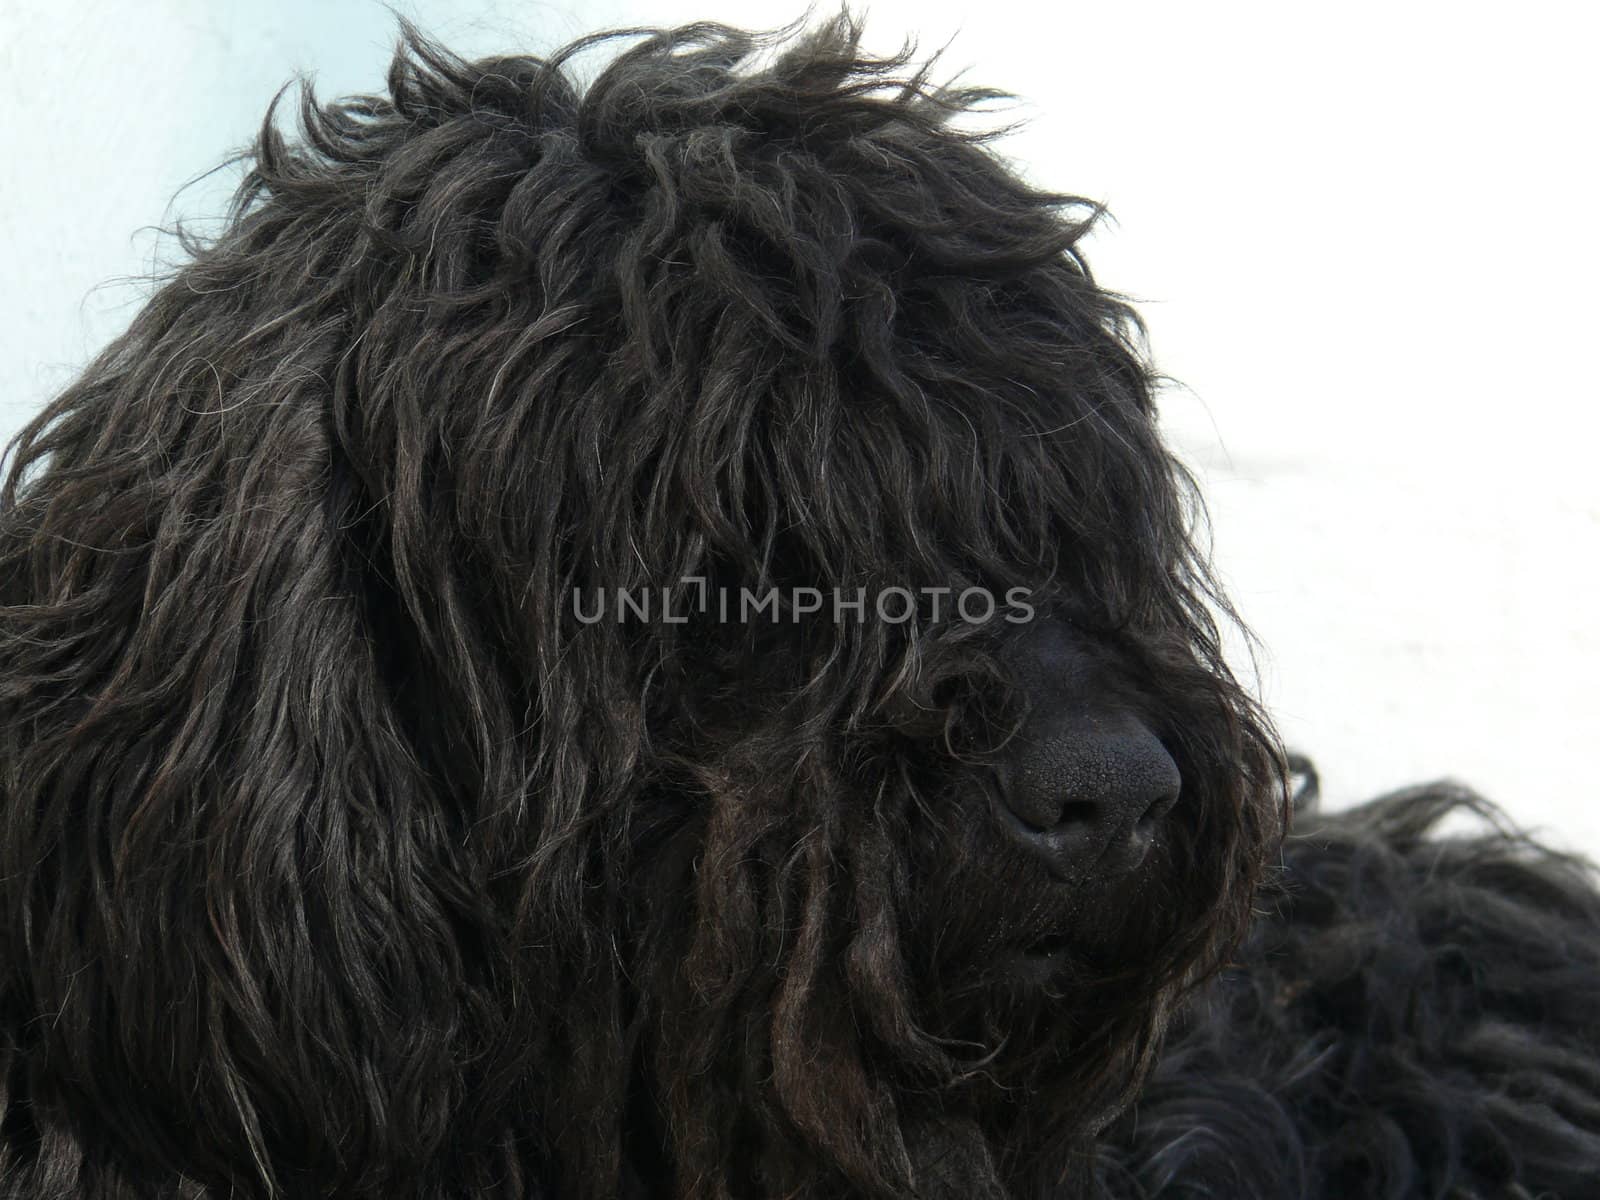 Black shaggy dog